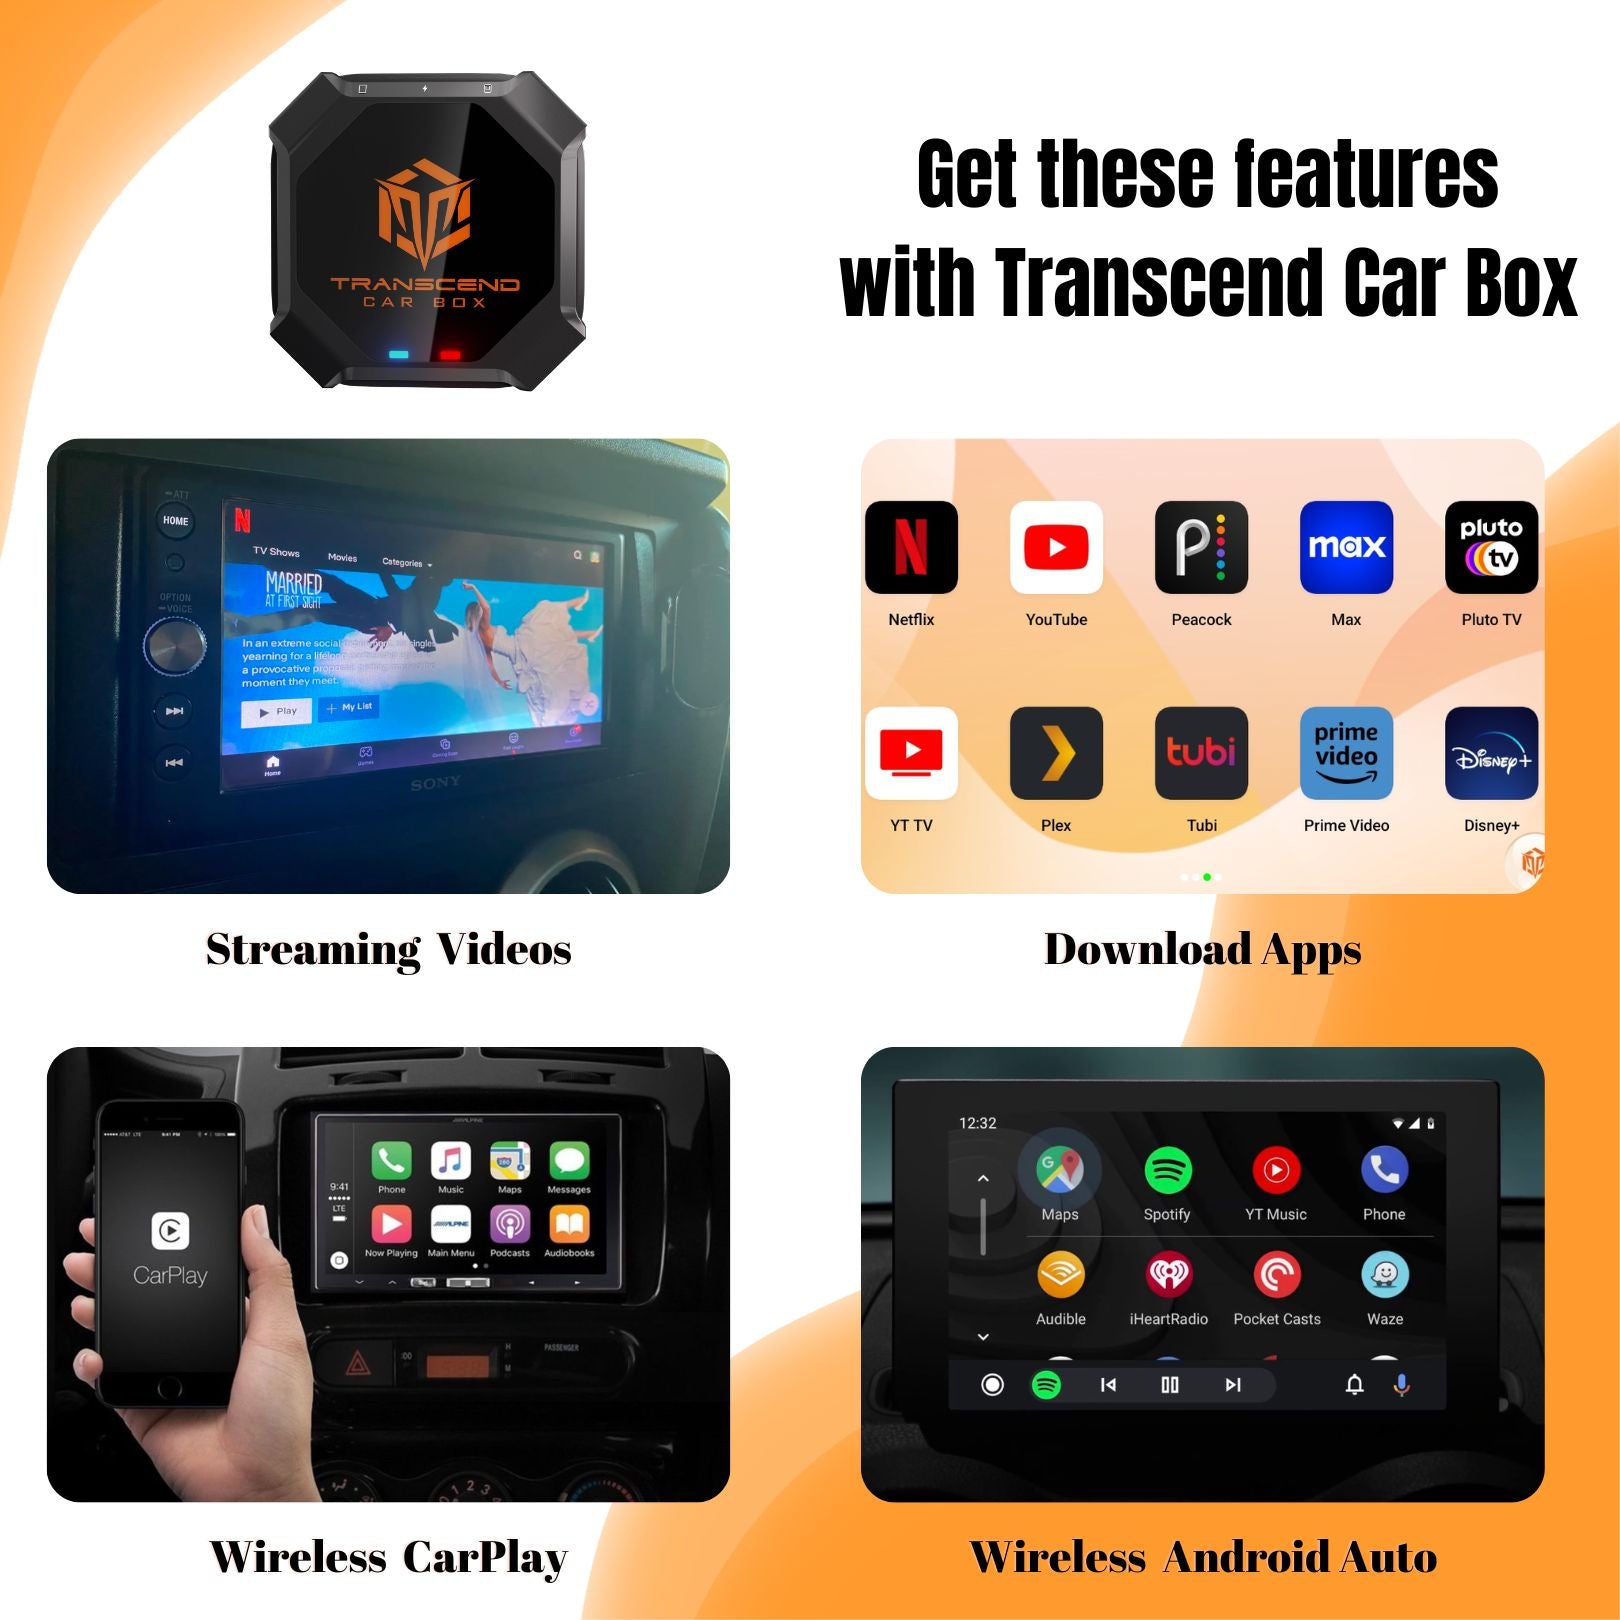 Watch Netflix on CarPlay using Transcend Car Box